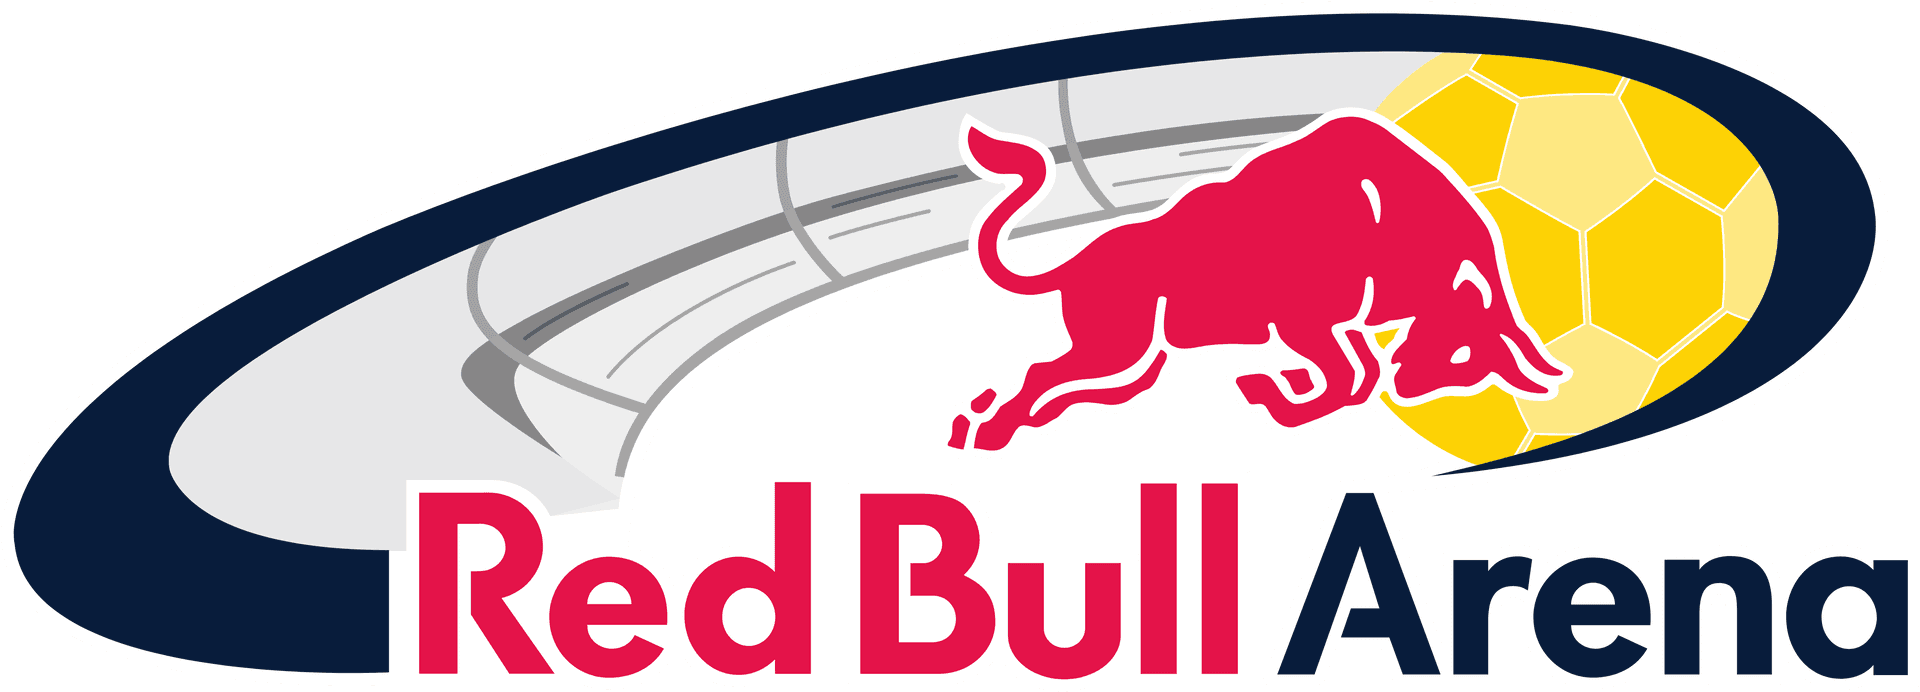 Red Bull Arena Logo PNG image